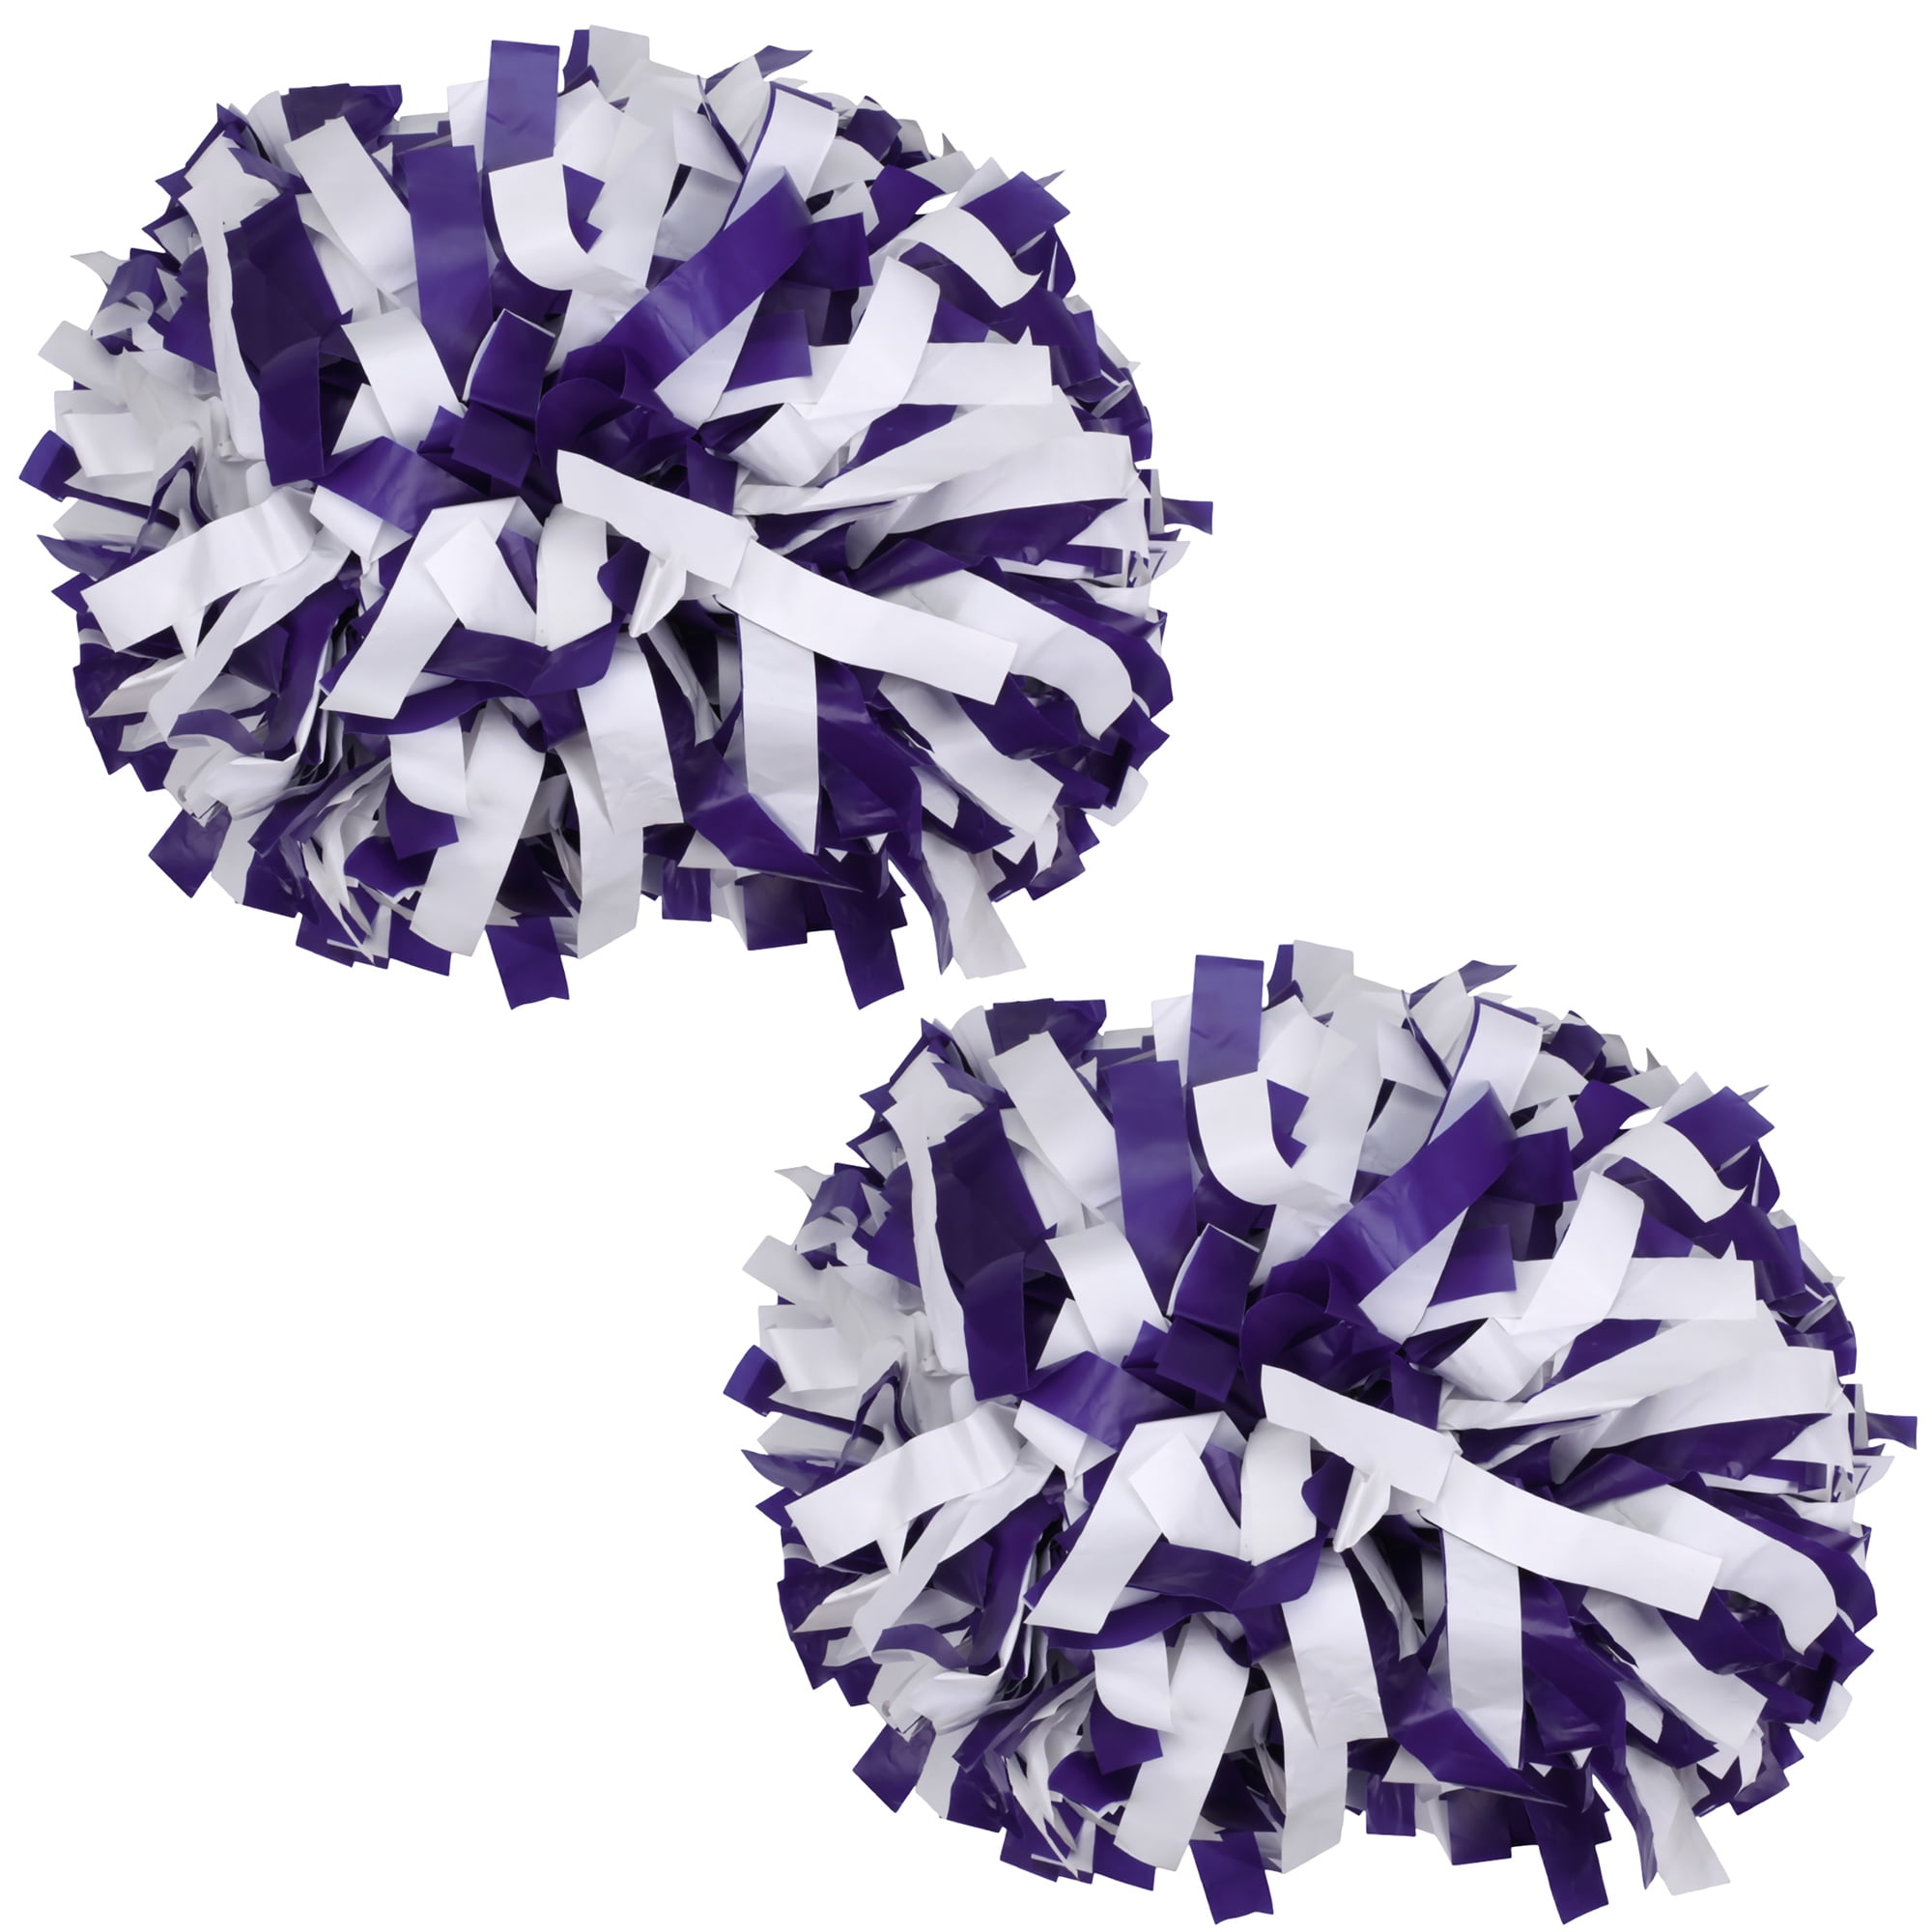 Lovecheer 2PCS Cheerleading Pom Poms Purple and White Plastic